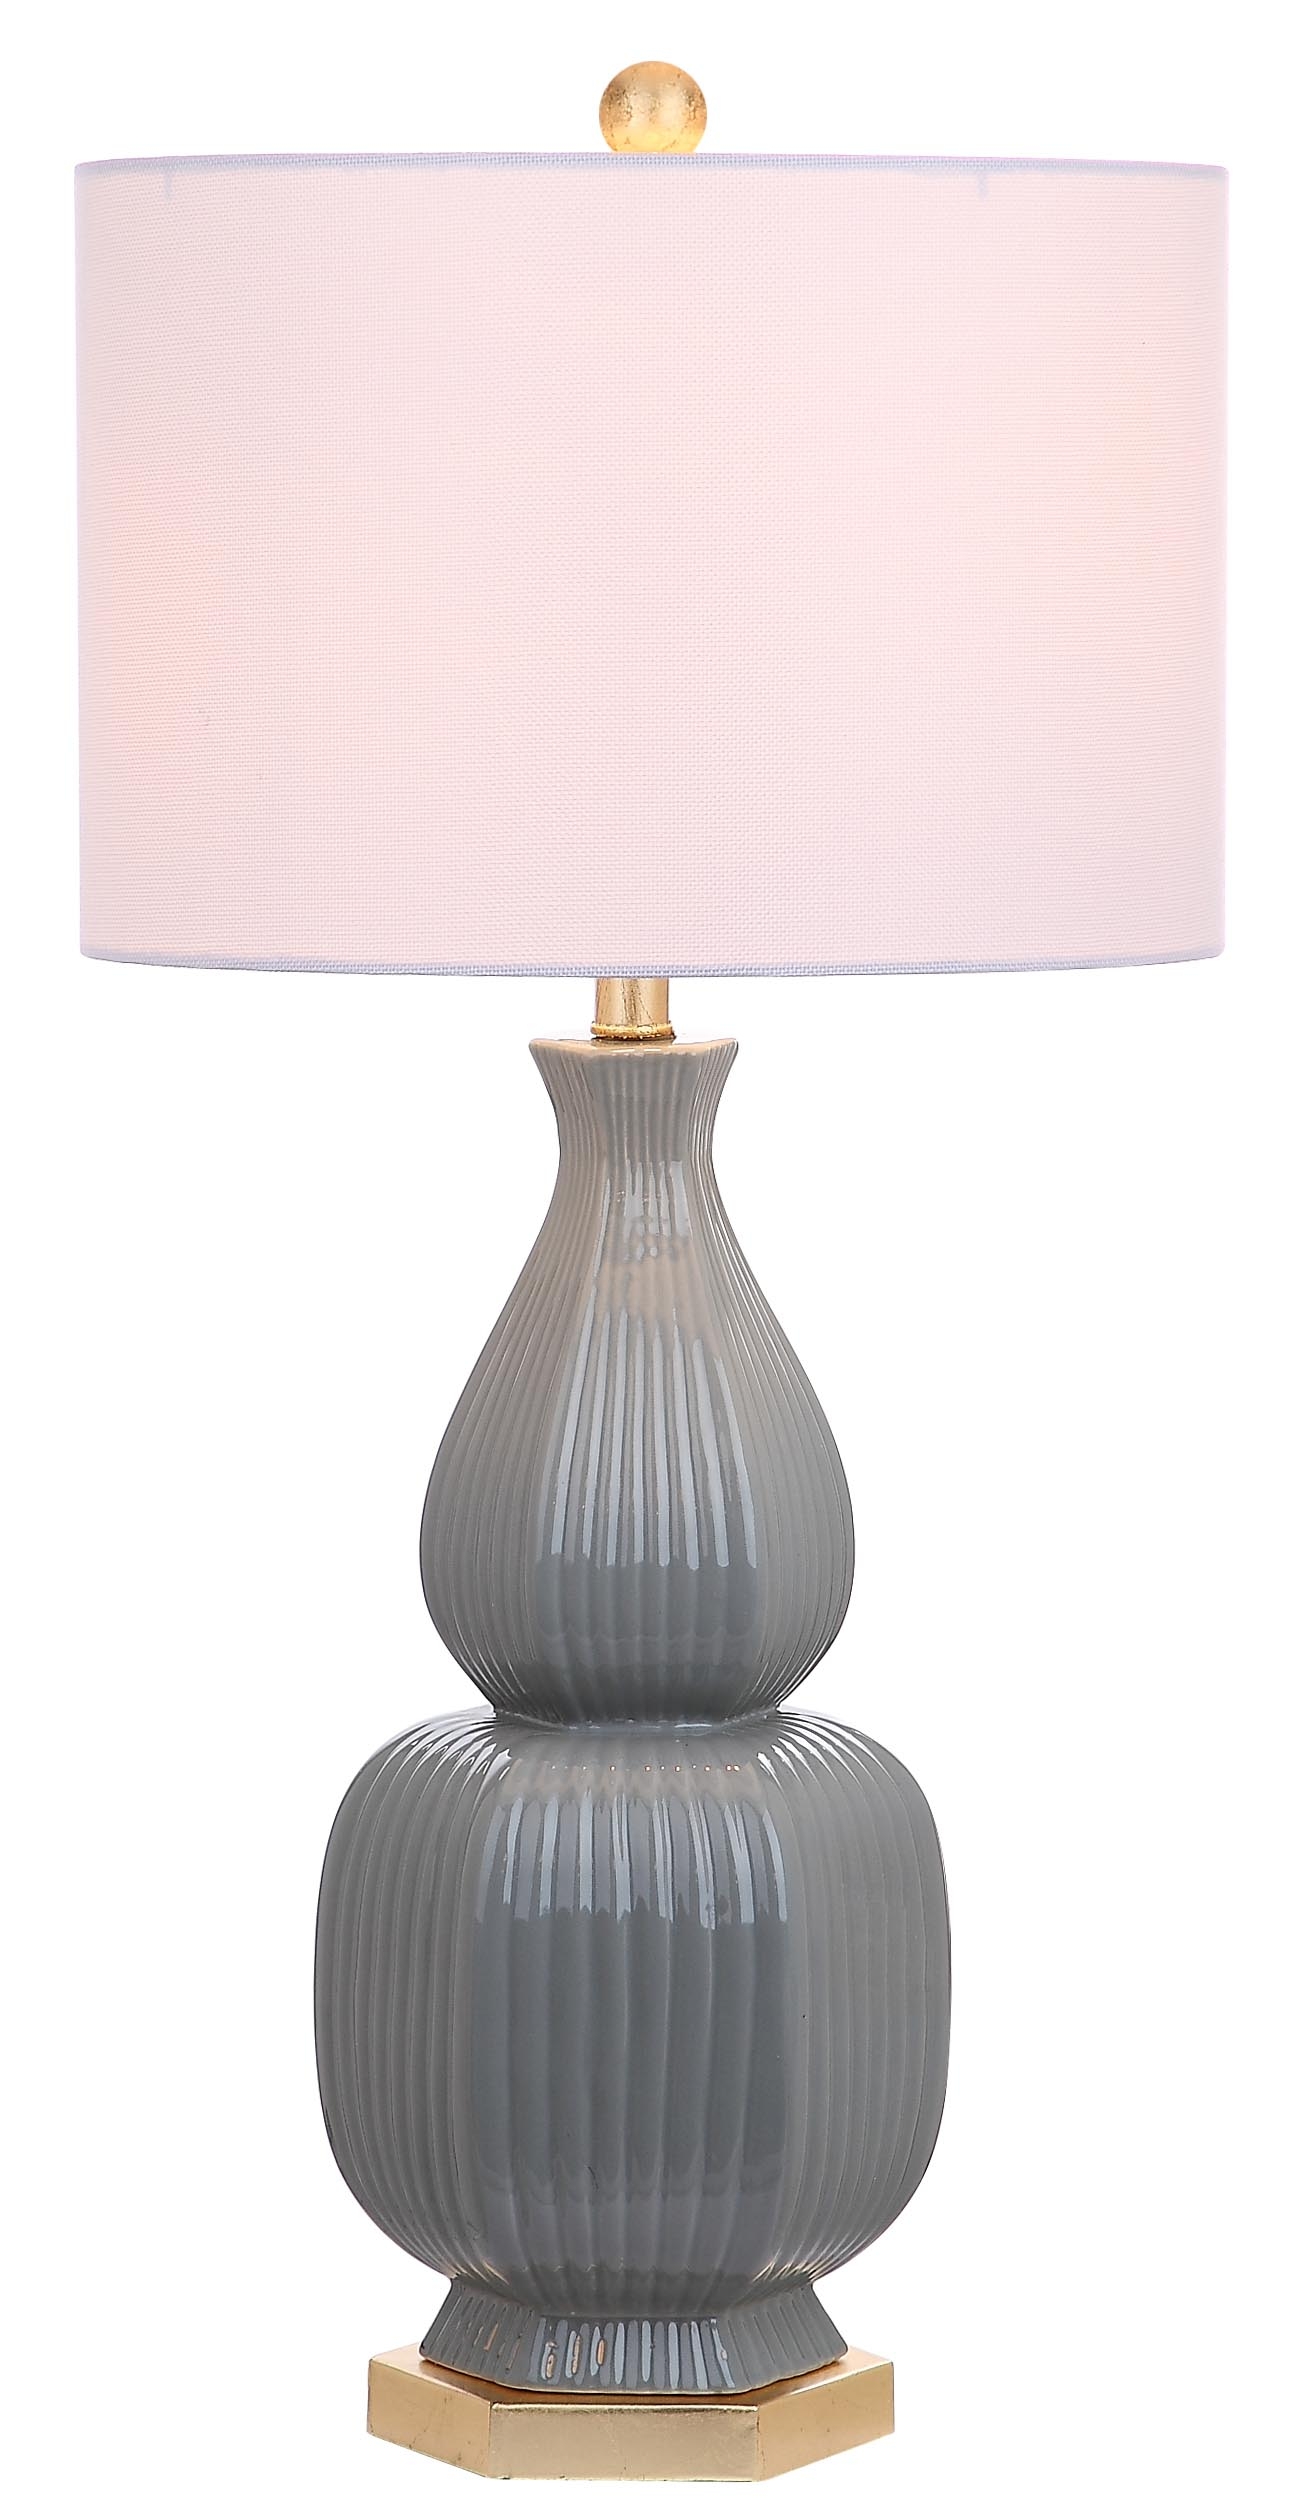 Cleo 31.5-Inch H Table Lamp - Grey - Safavieh - Image 2